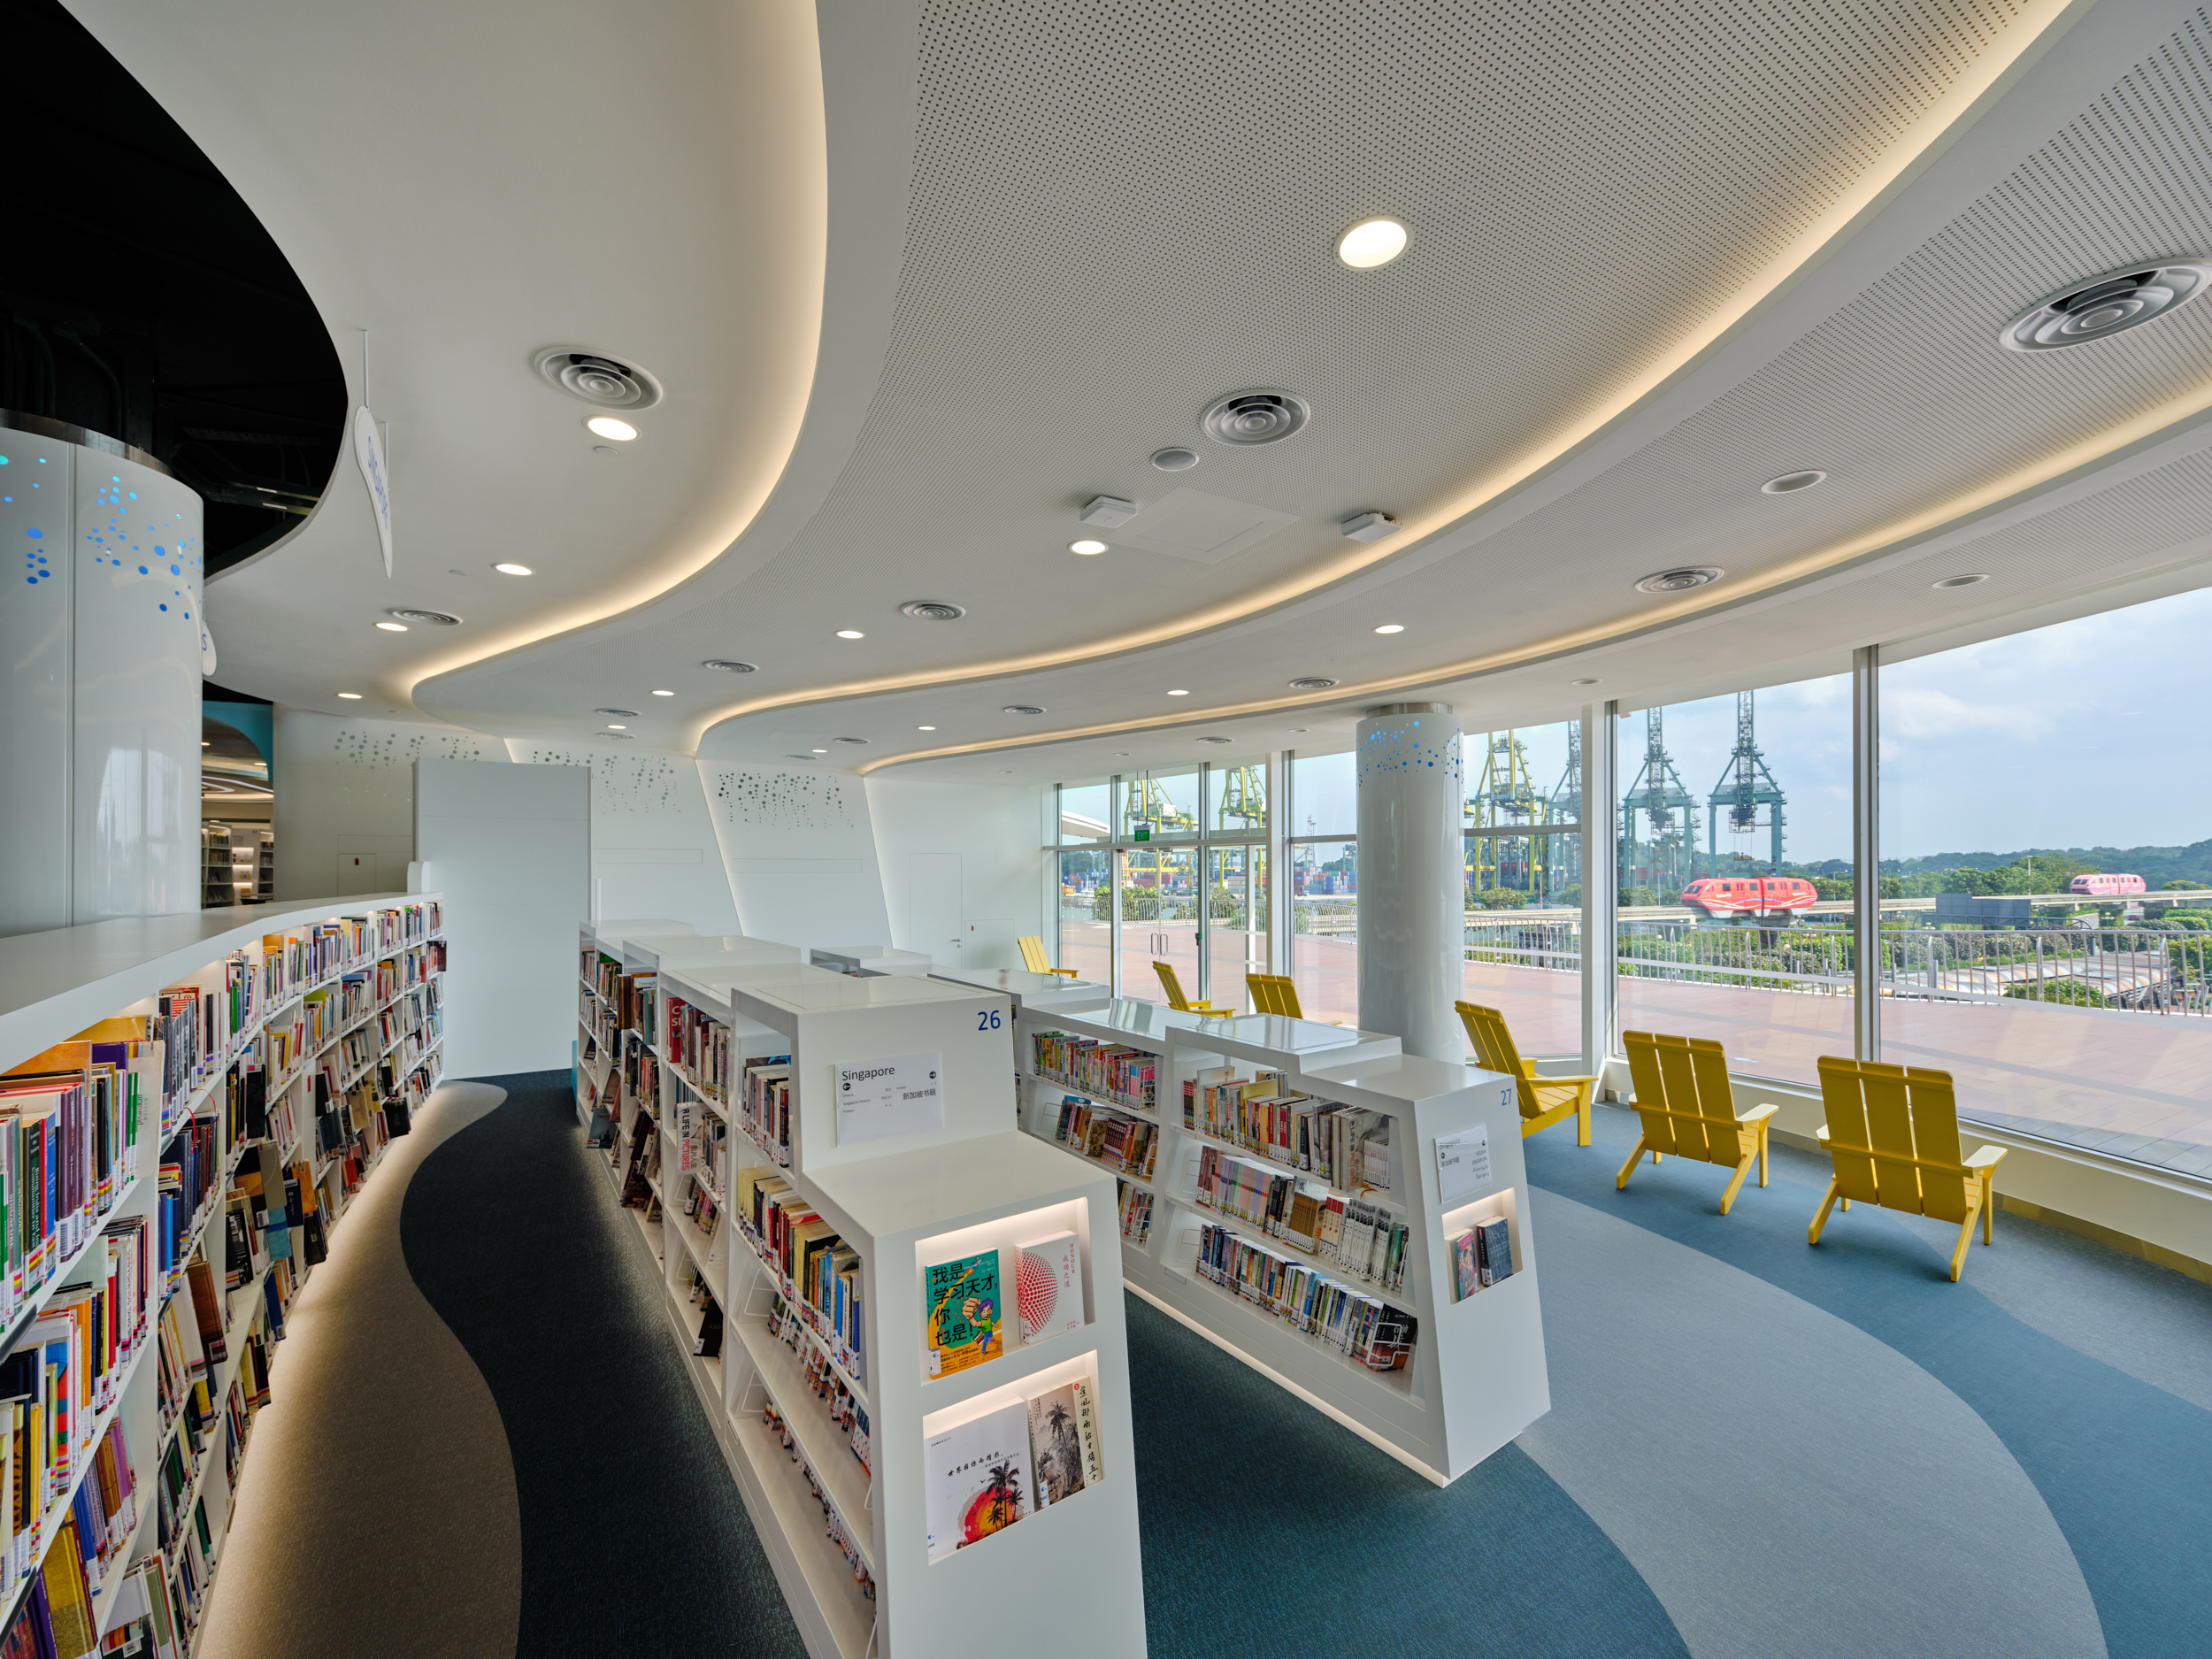   library@harbourfront, Singapore   design, client:   Metaphor Design + Architecture     